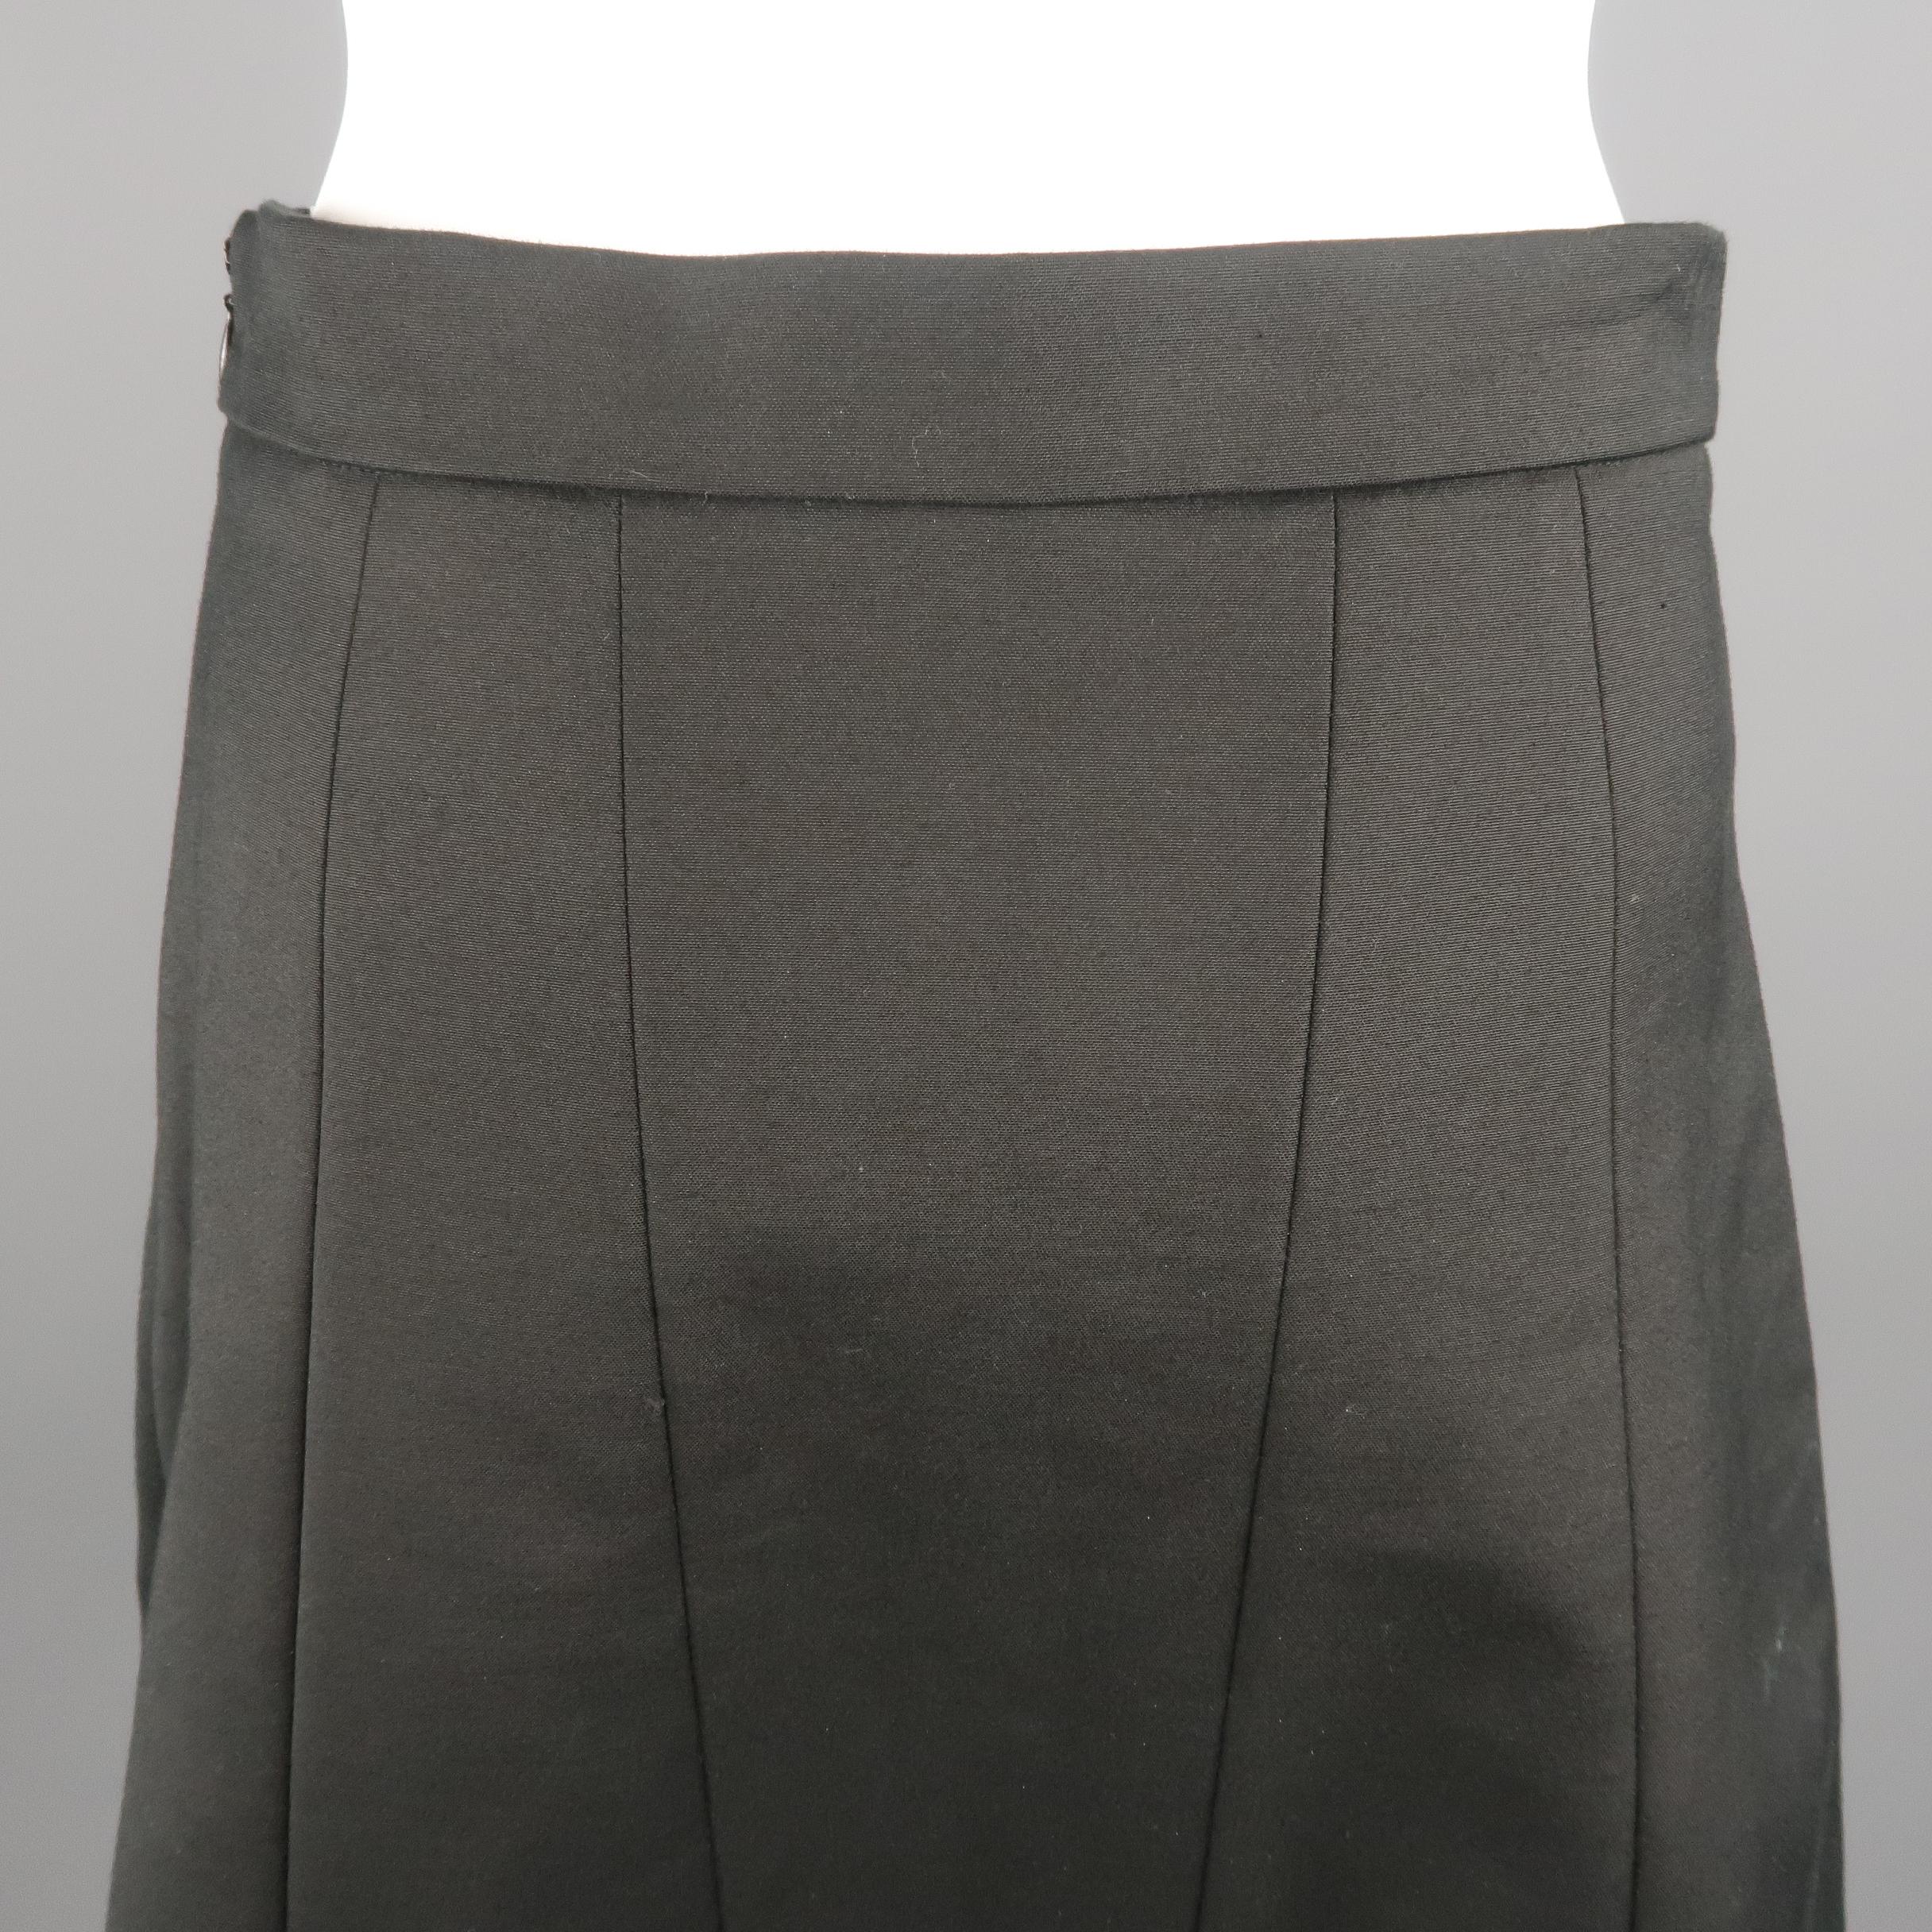 VERSUS by GIANNI VERSACE Size 6 Black Cotton Asymmetrical Skirt 2